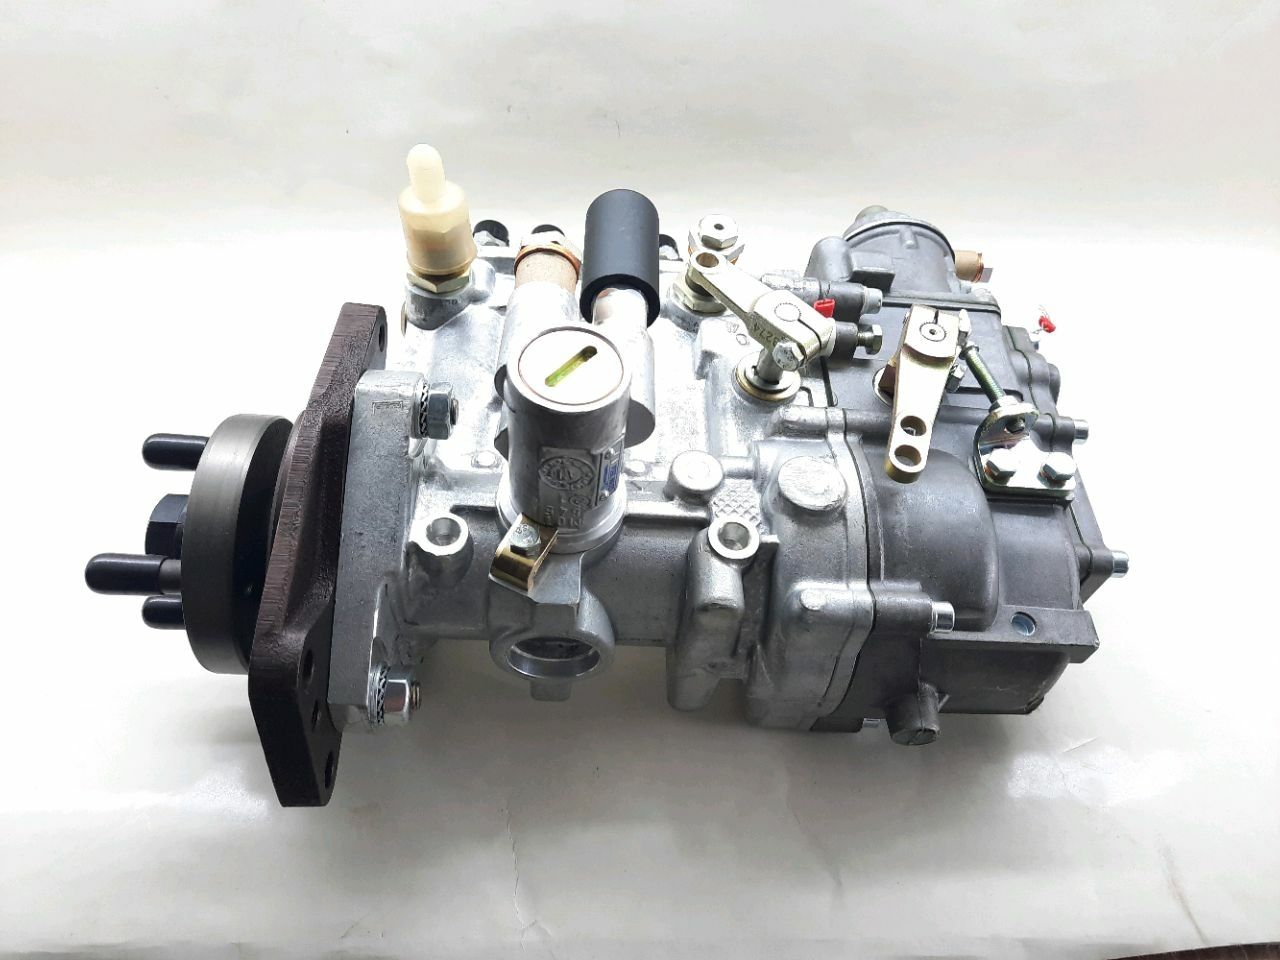 Pompa de injectie D-245.S (MTZ-950)(Motorpal)